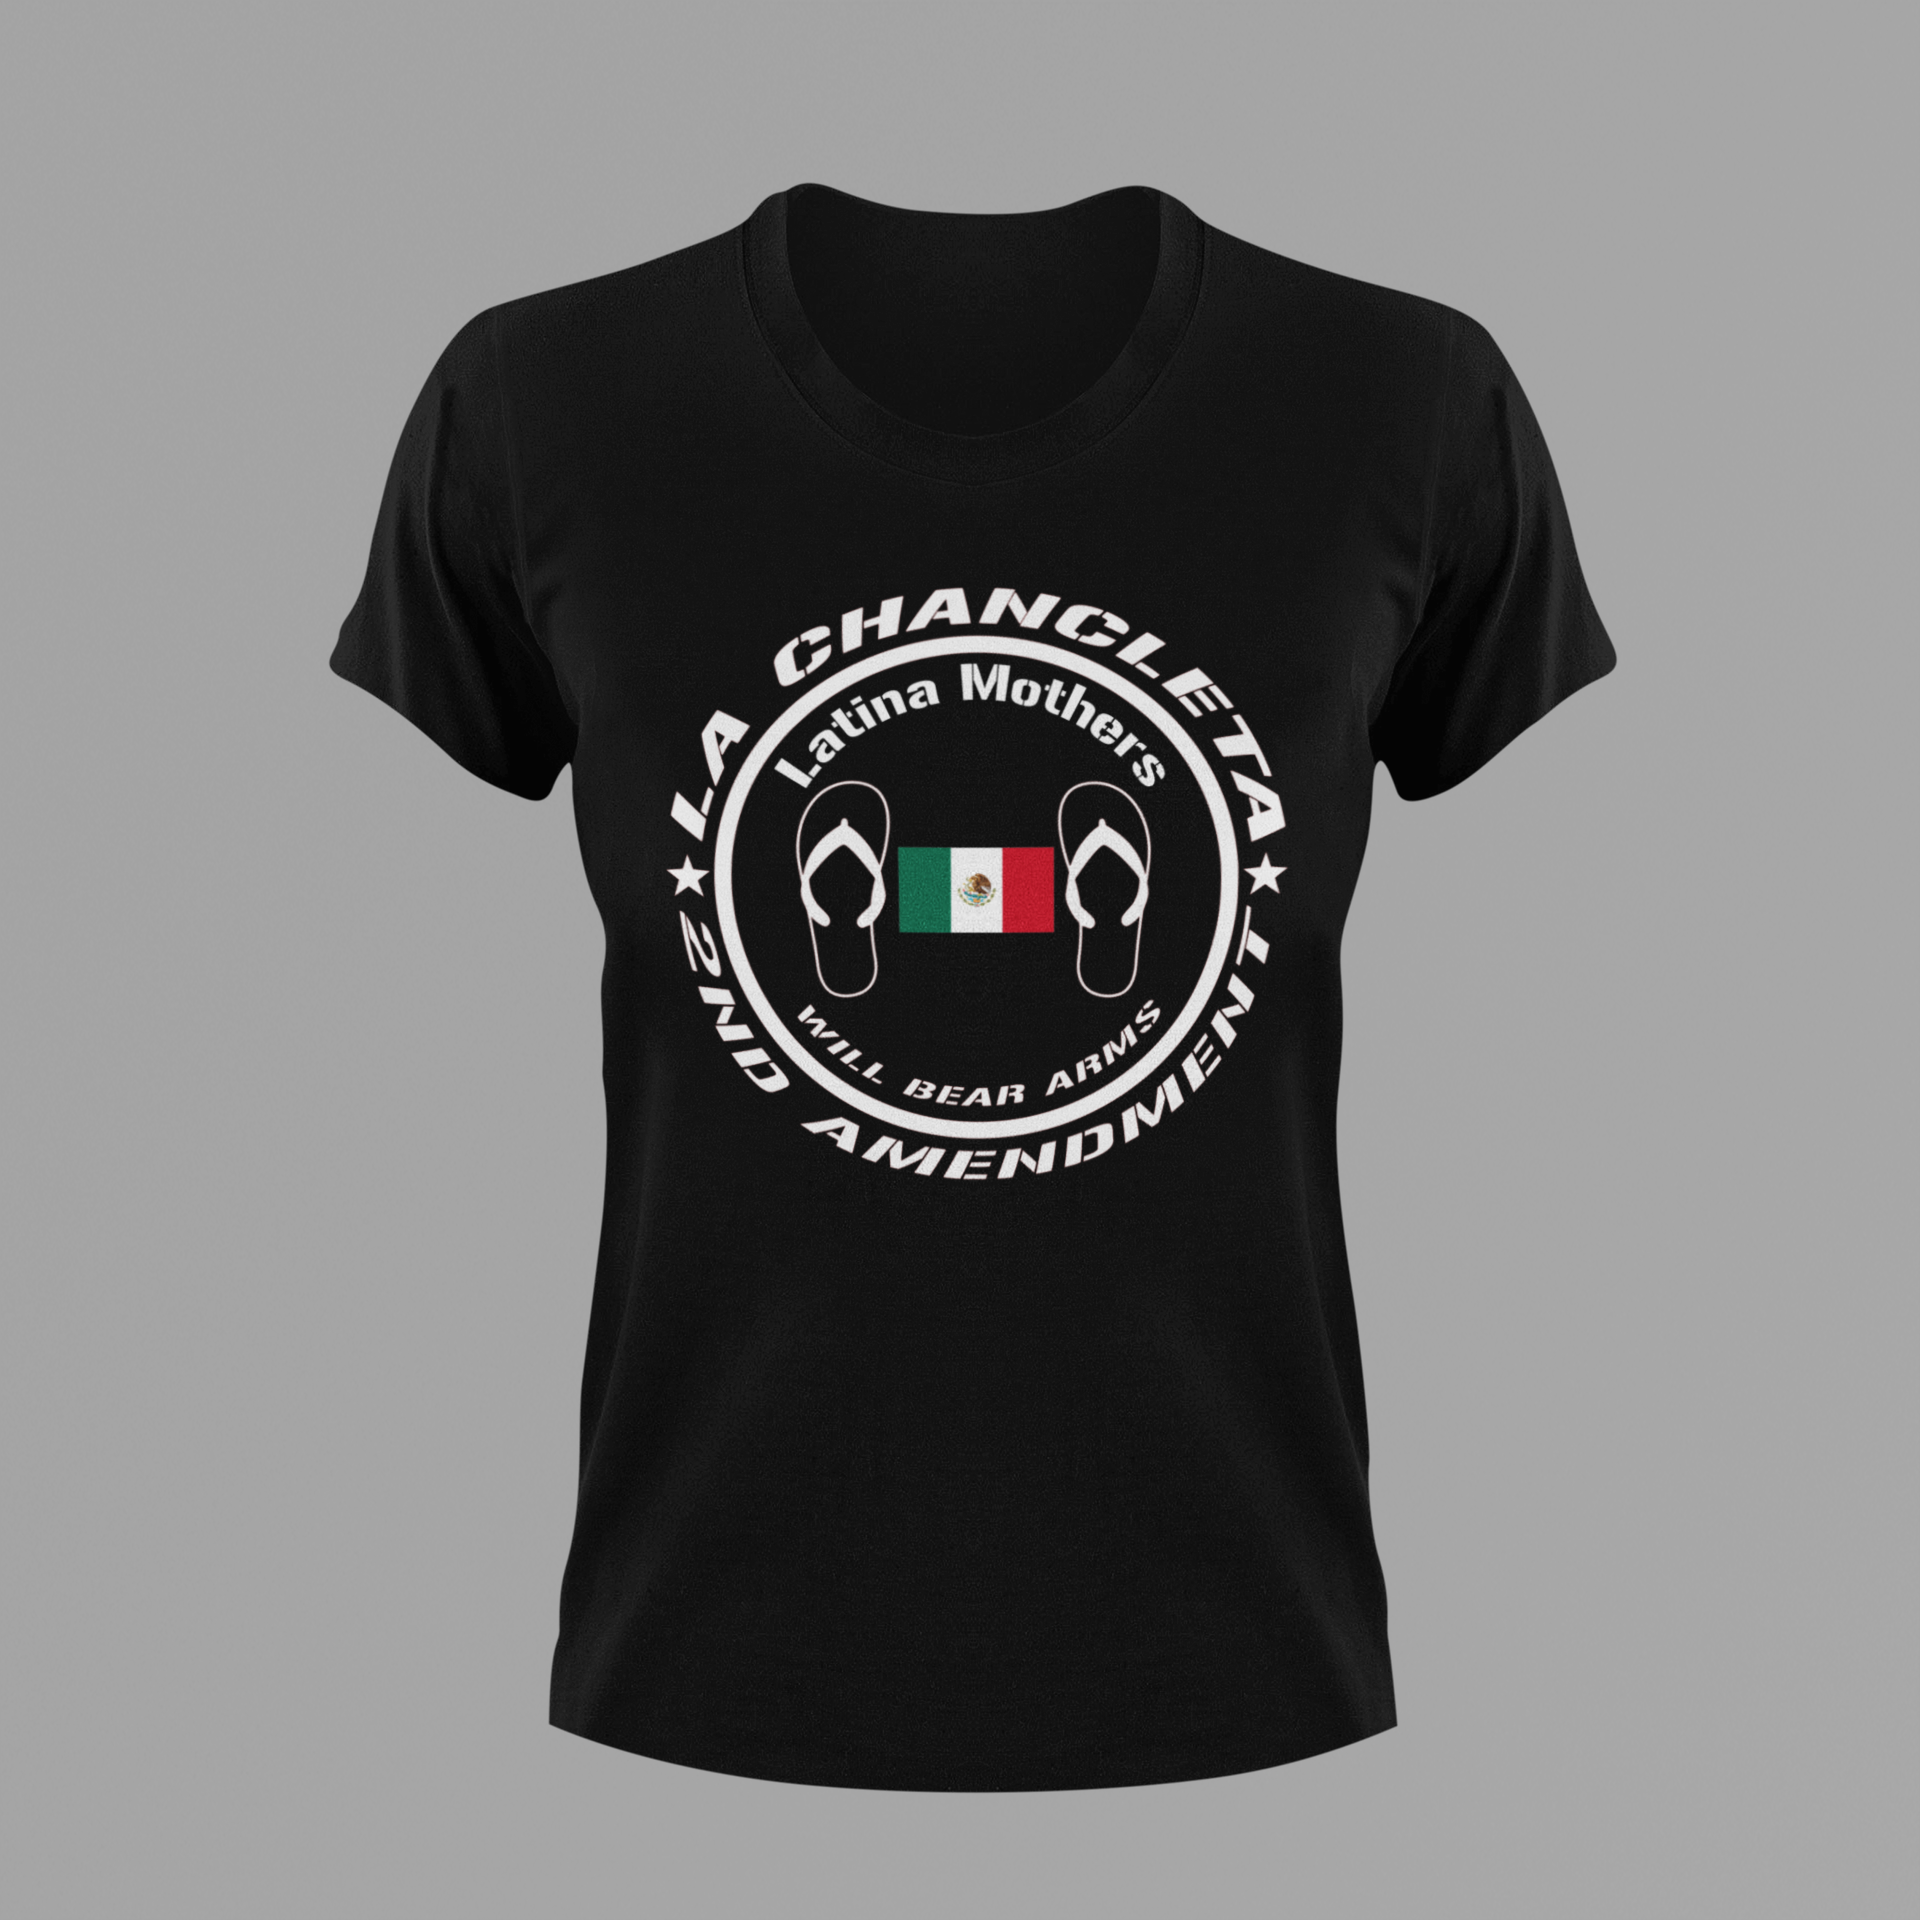 Support The Chancleta Shirt